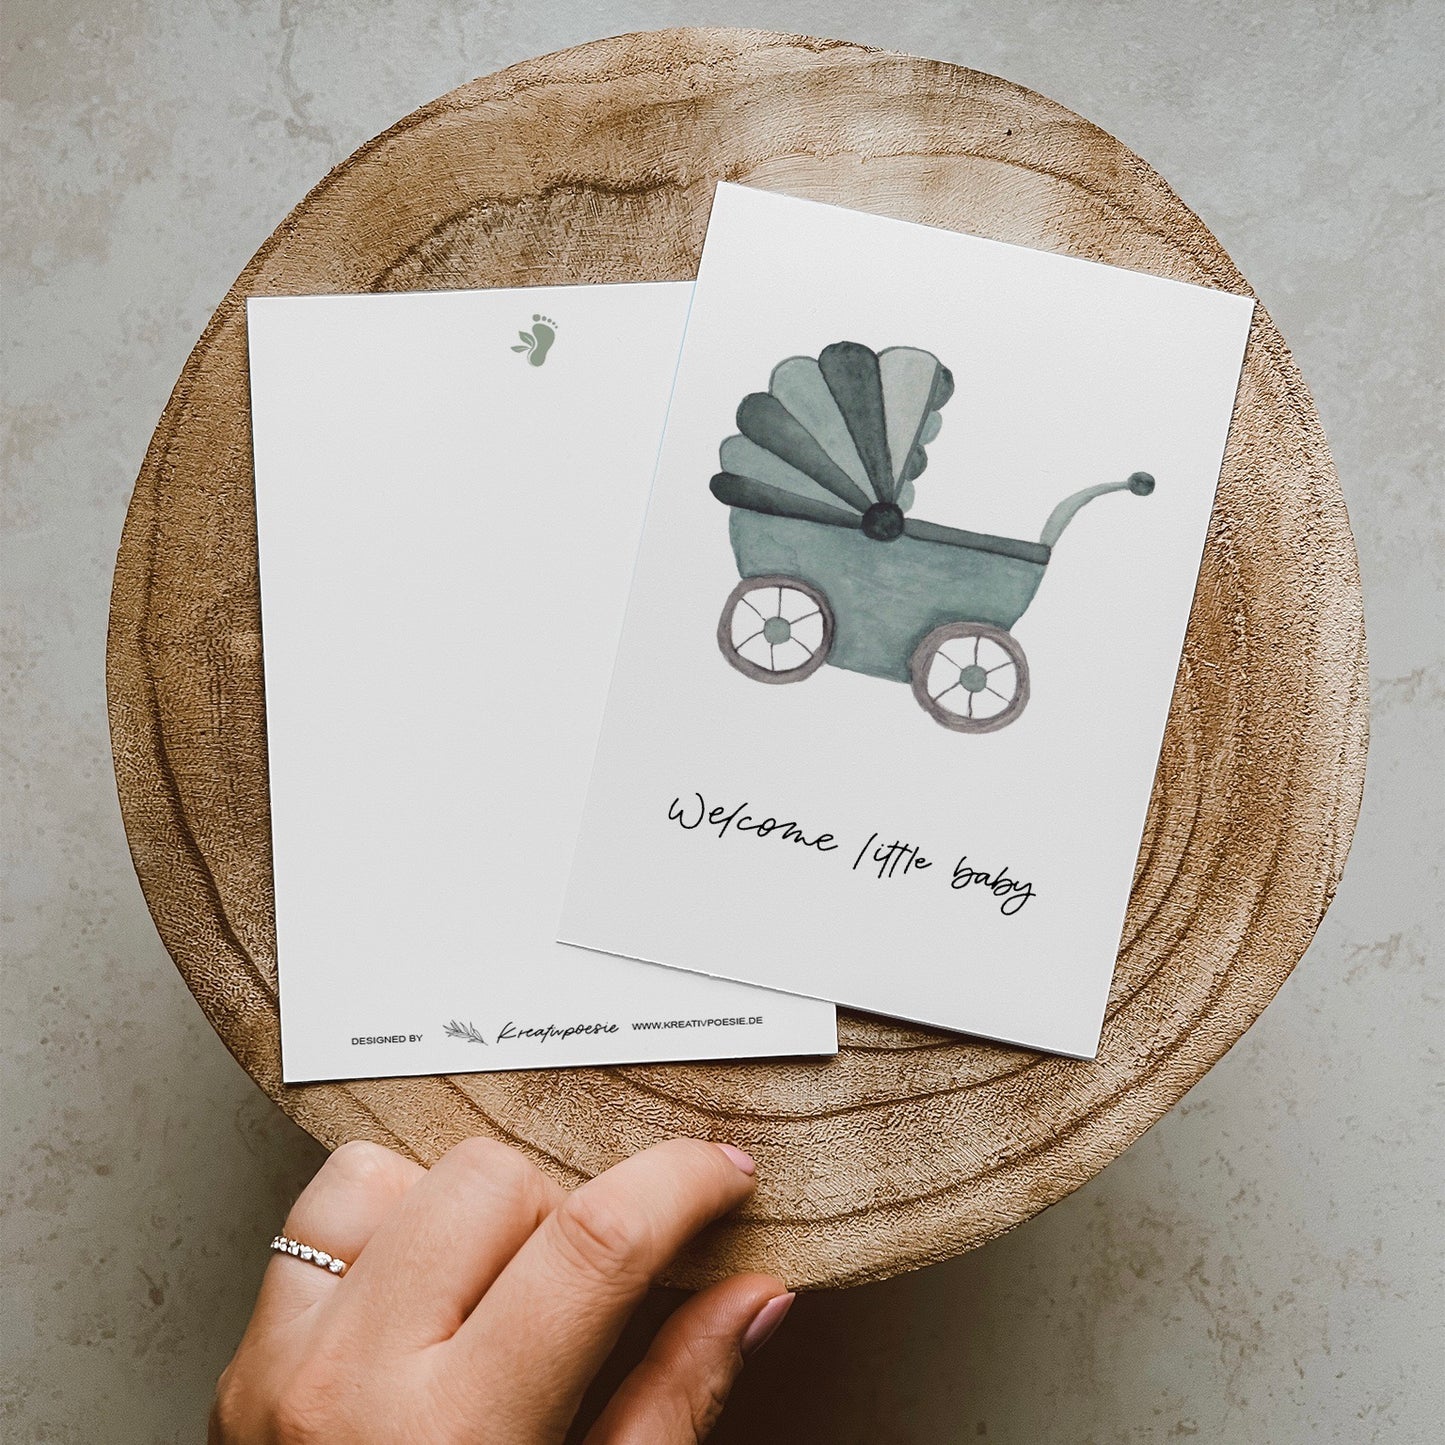 Postkarte »welcome little baby | Kinderwagen«, DIN A6, Recyclingpapier